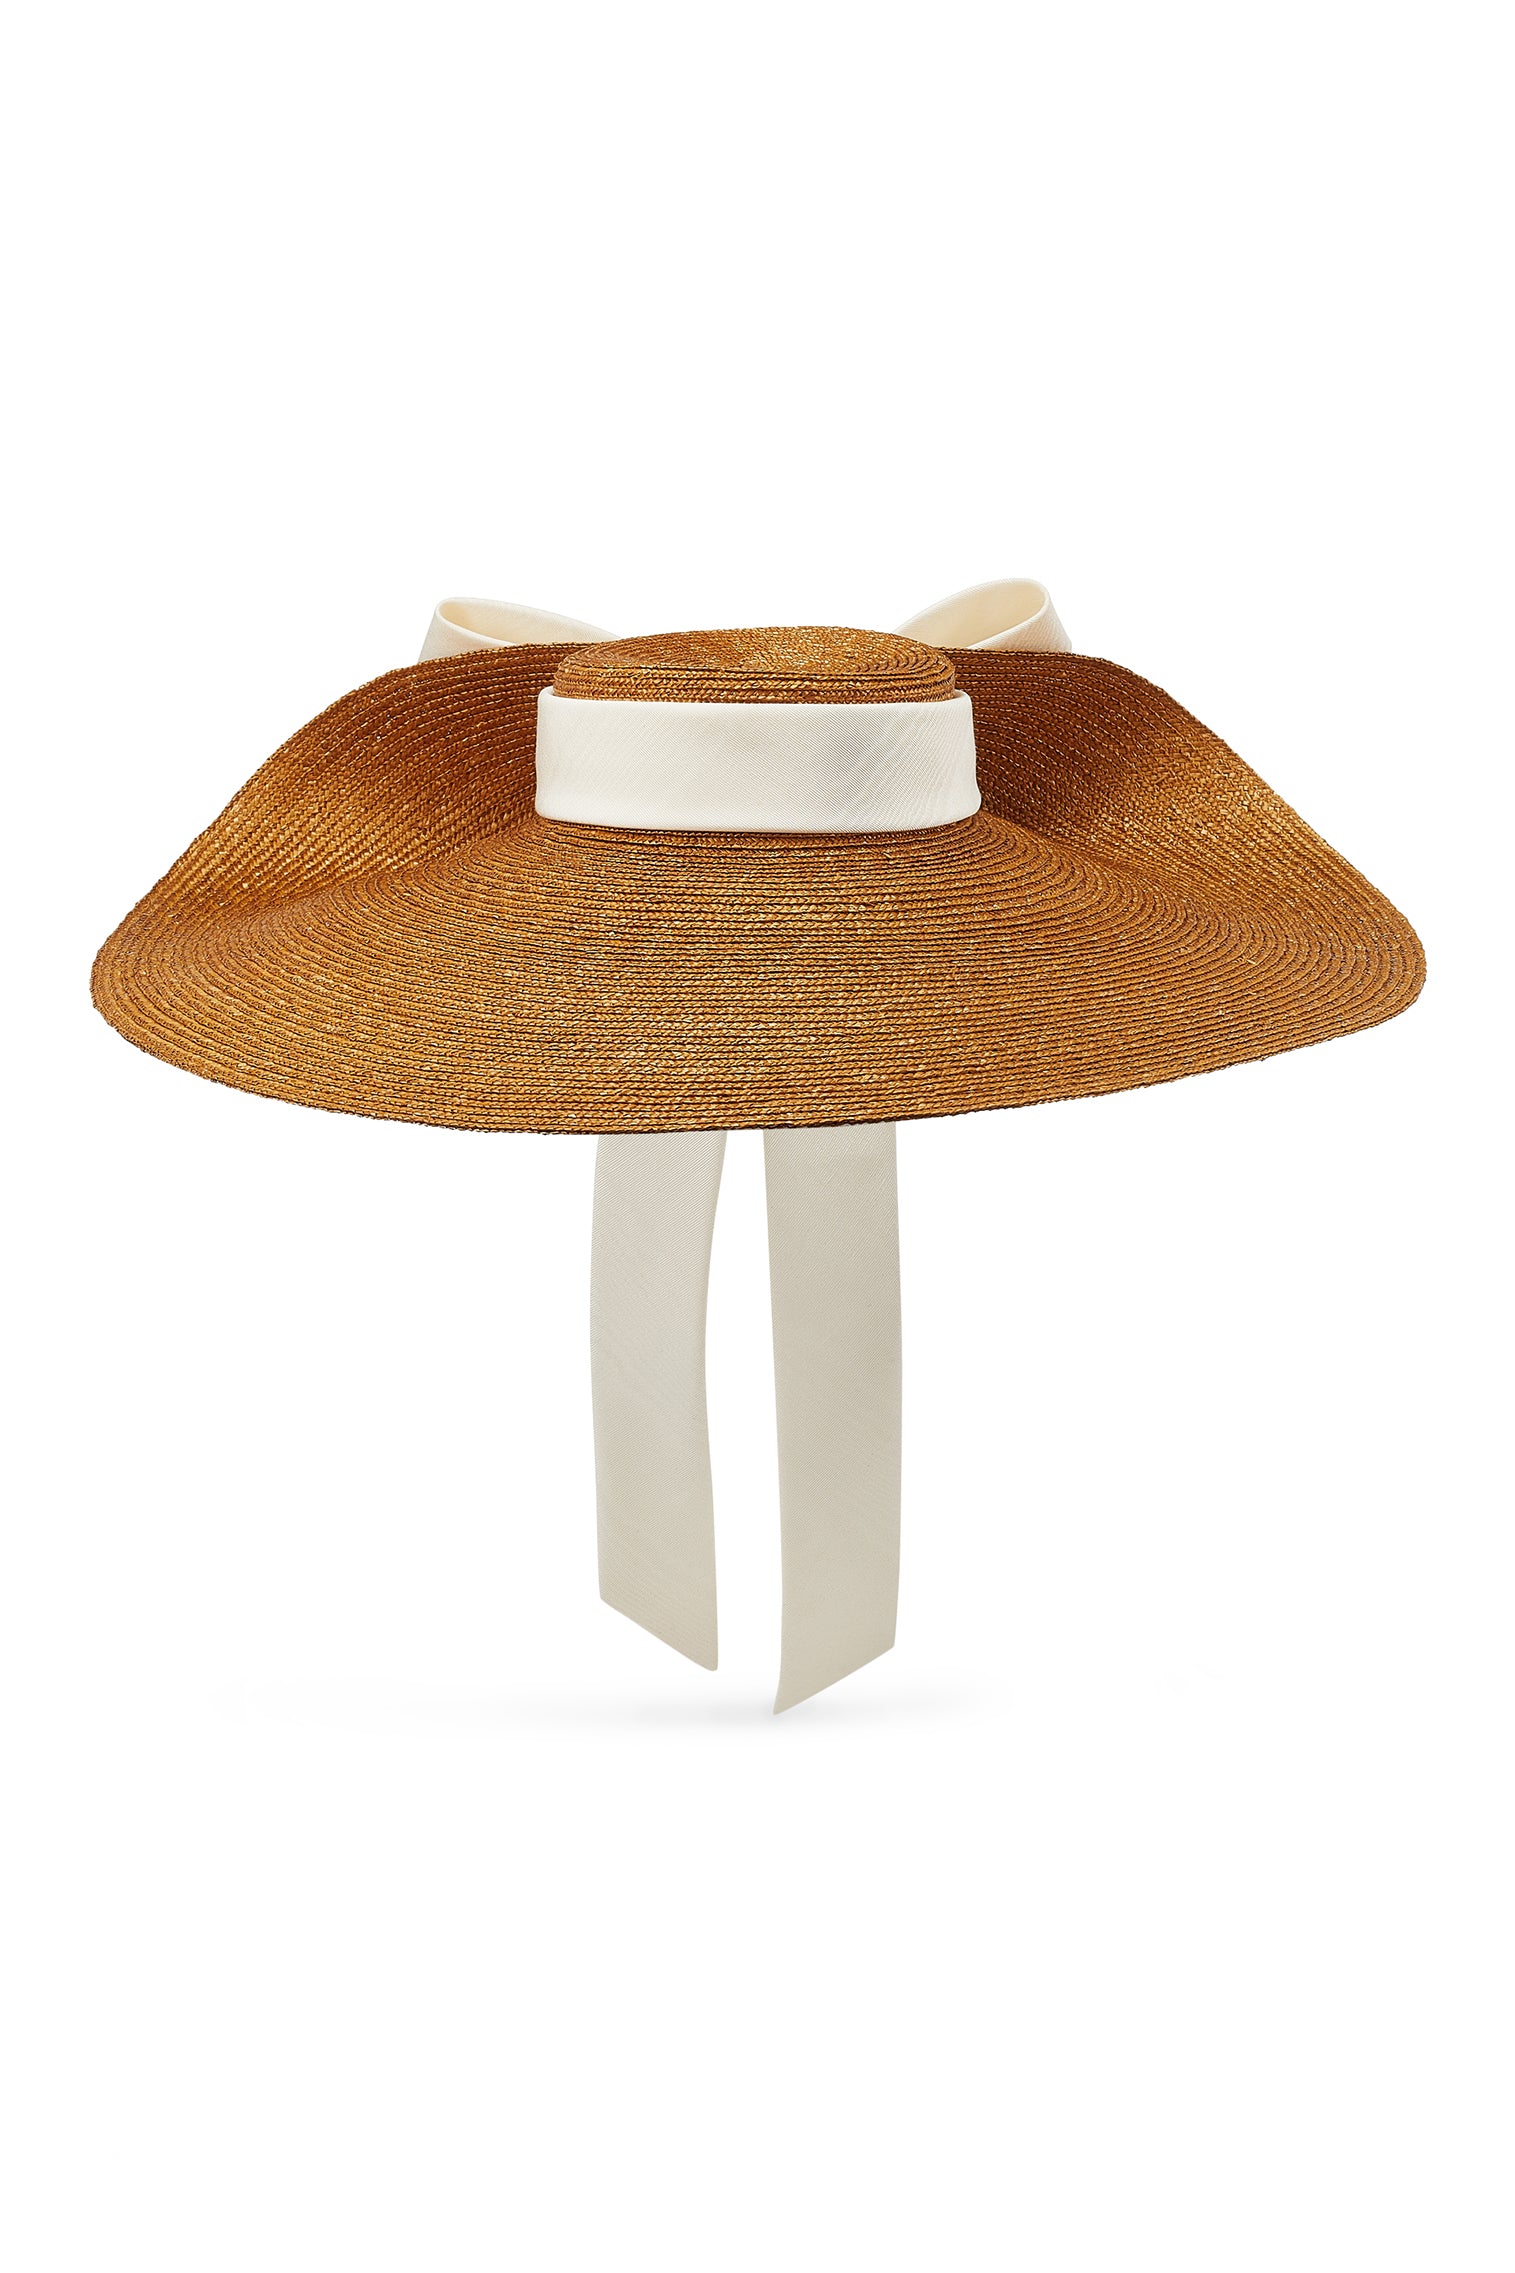 Lady Grey Natural Wide Brim Hat - Panamas & Sun Hats for Women - Lock & Co. Hatters London UK